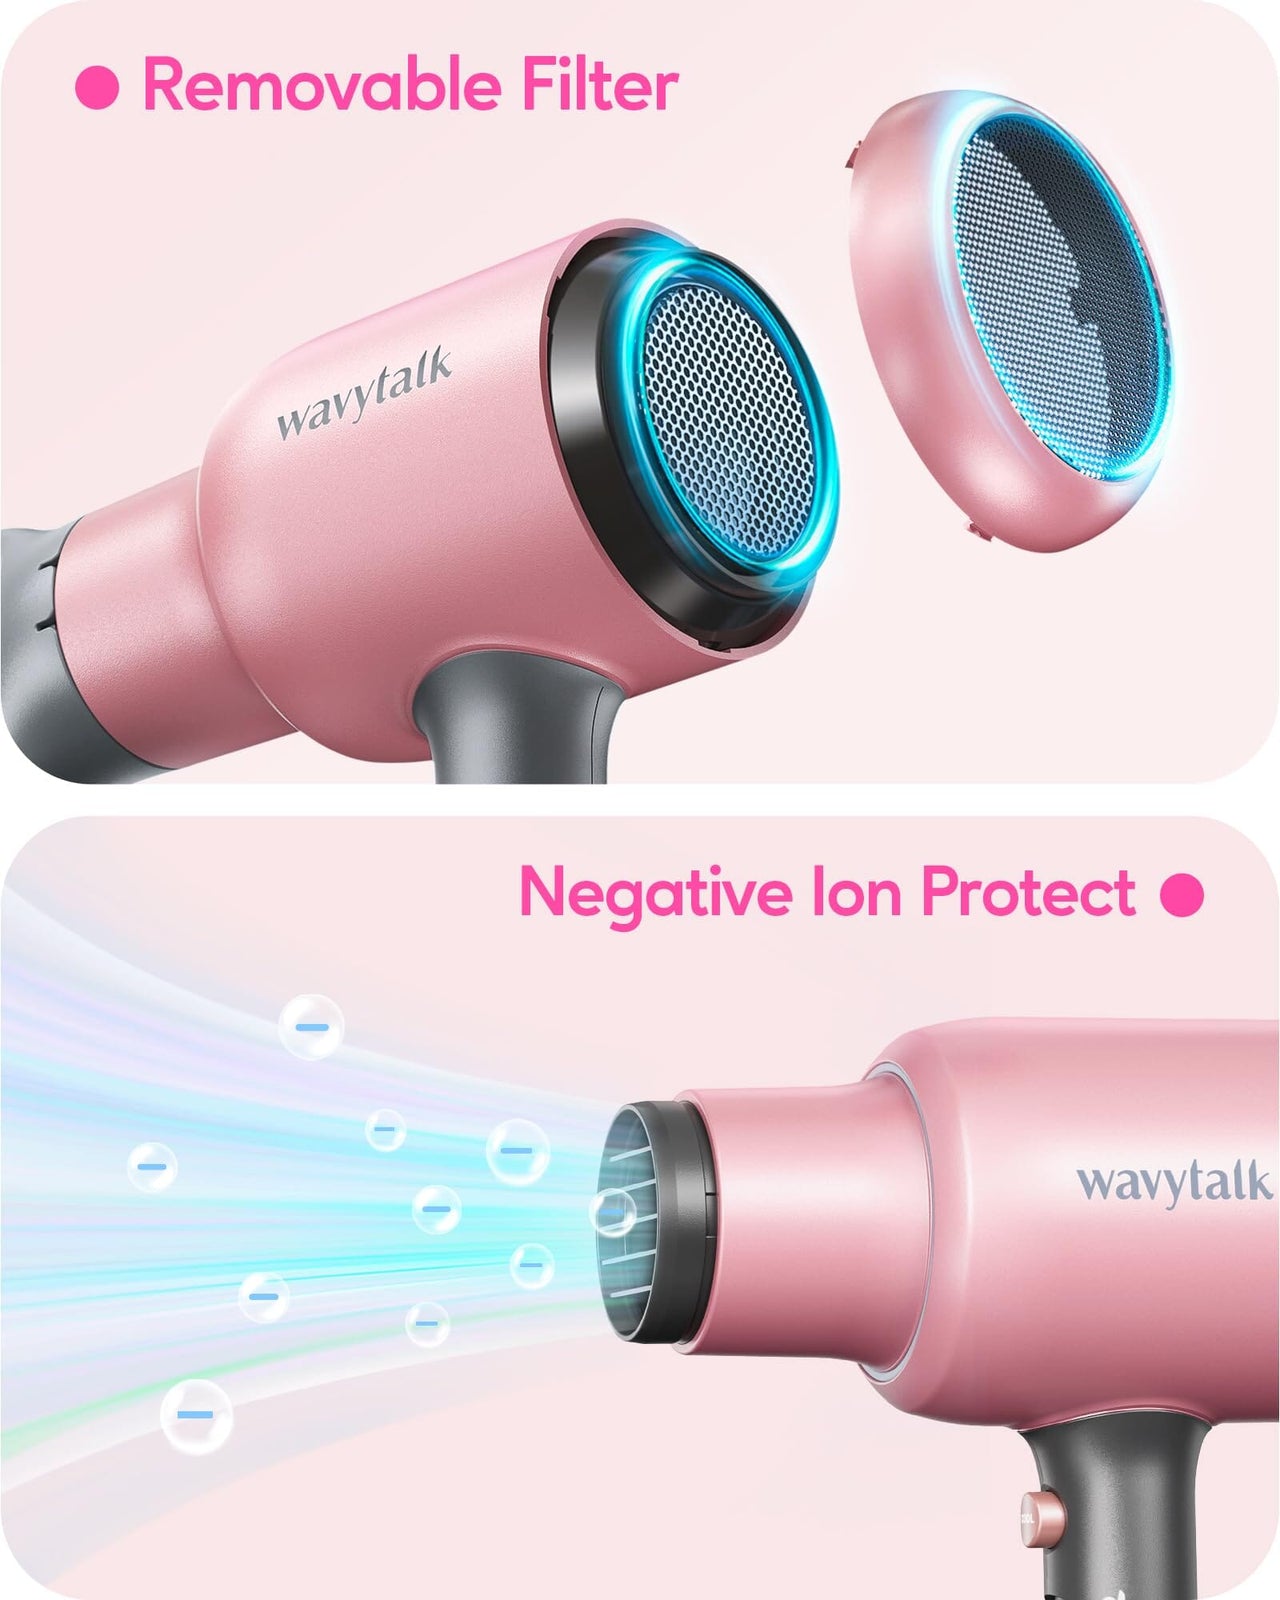 wavytalk Wavytalk |  Ionic Hair Dryer